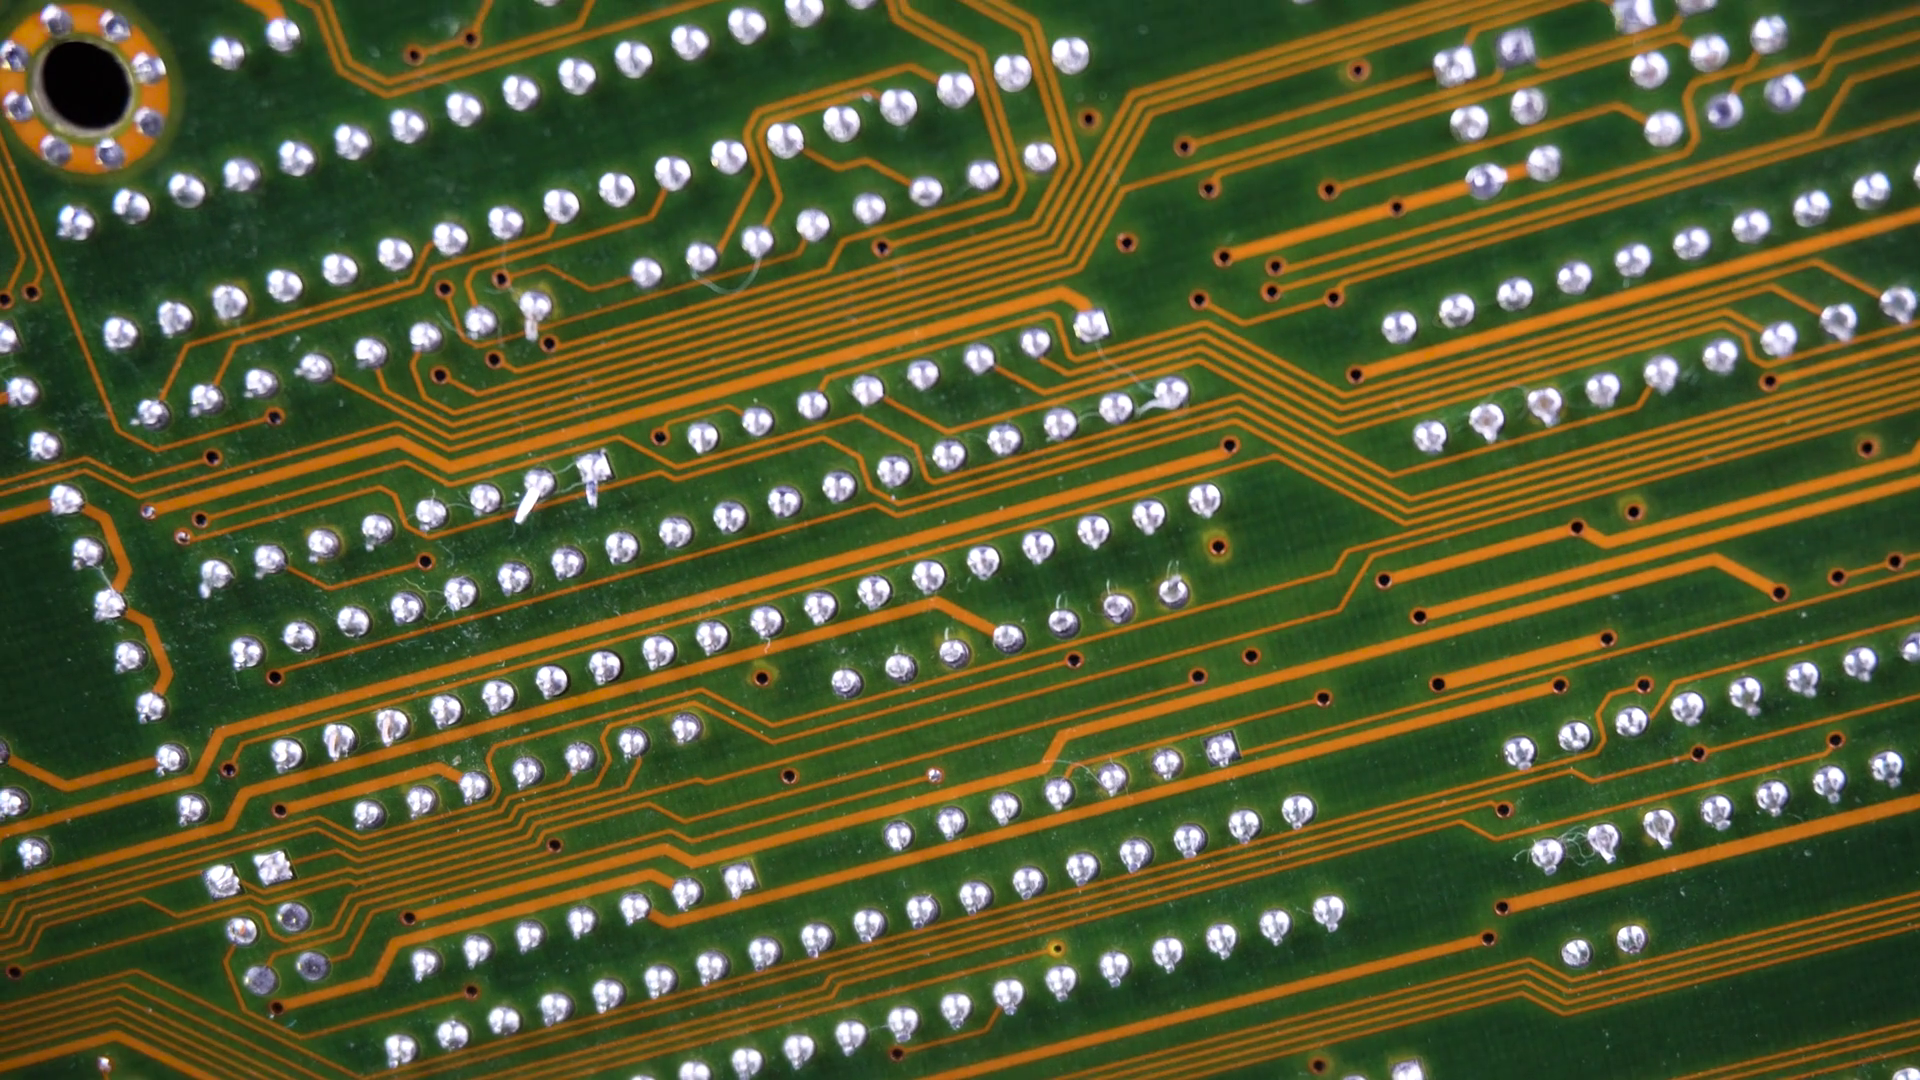 PC electronic circuit board close up. Stock Video Footage - Videoblocks